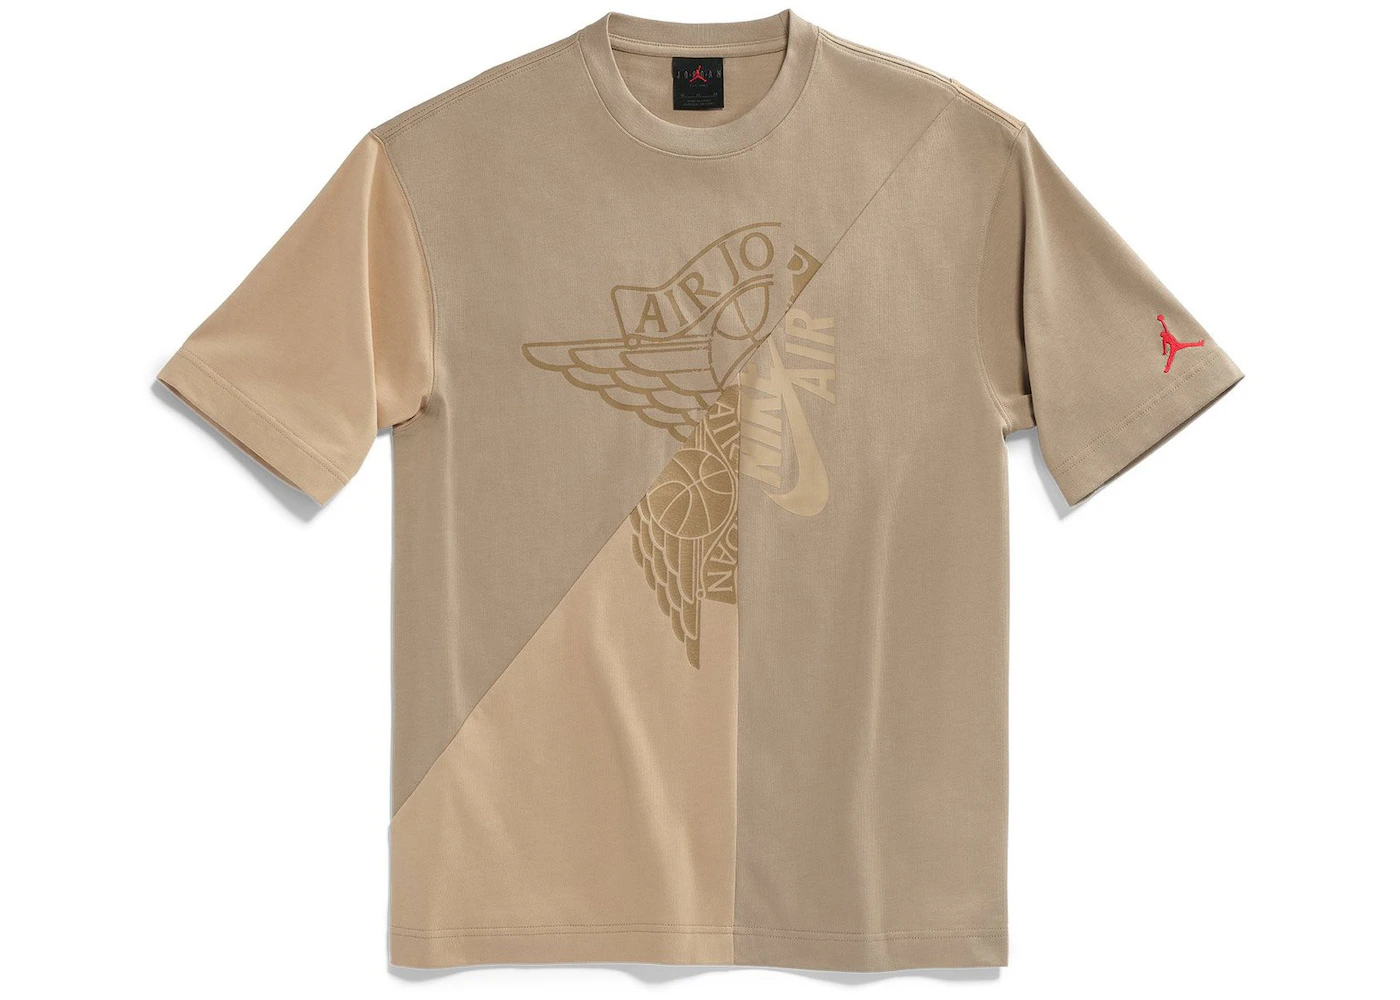 Chemist Monastery spirit Travis Scott Cactus Jack x Jordan T-shirt Khaki/Desert - SS21 Men's - US